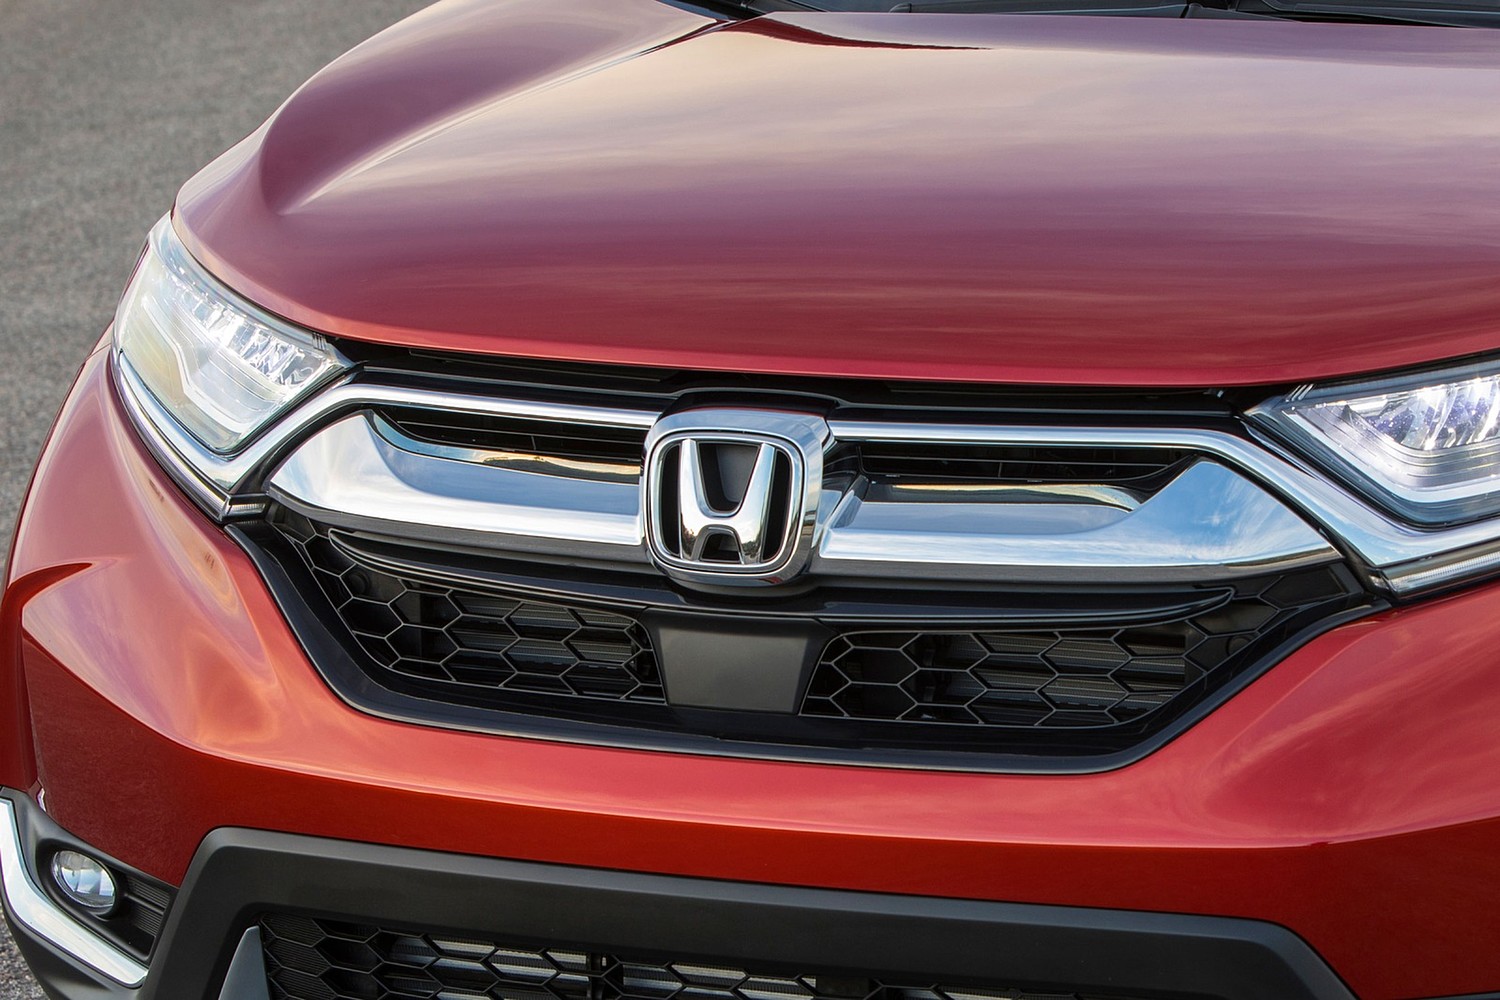 Honda CR-V Touring 4dr SUV Front Badge (2017 model year shown)